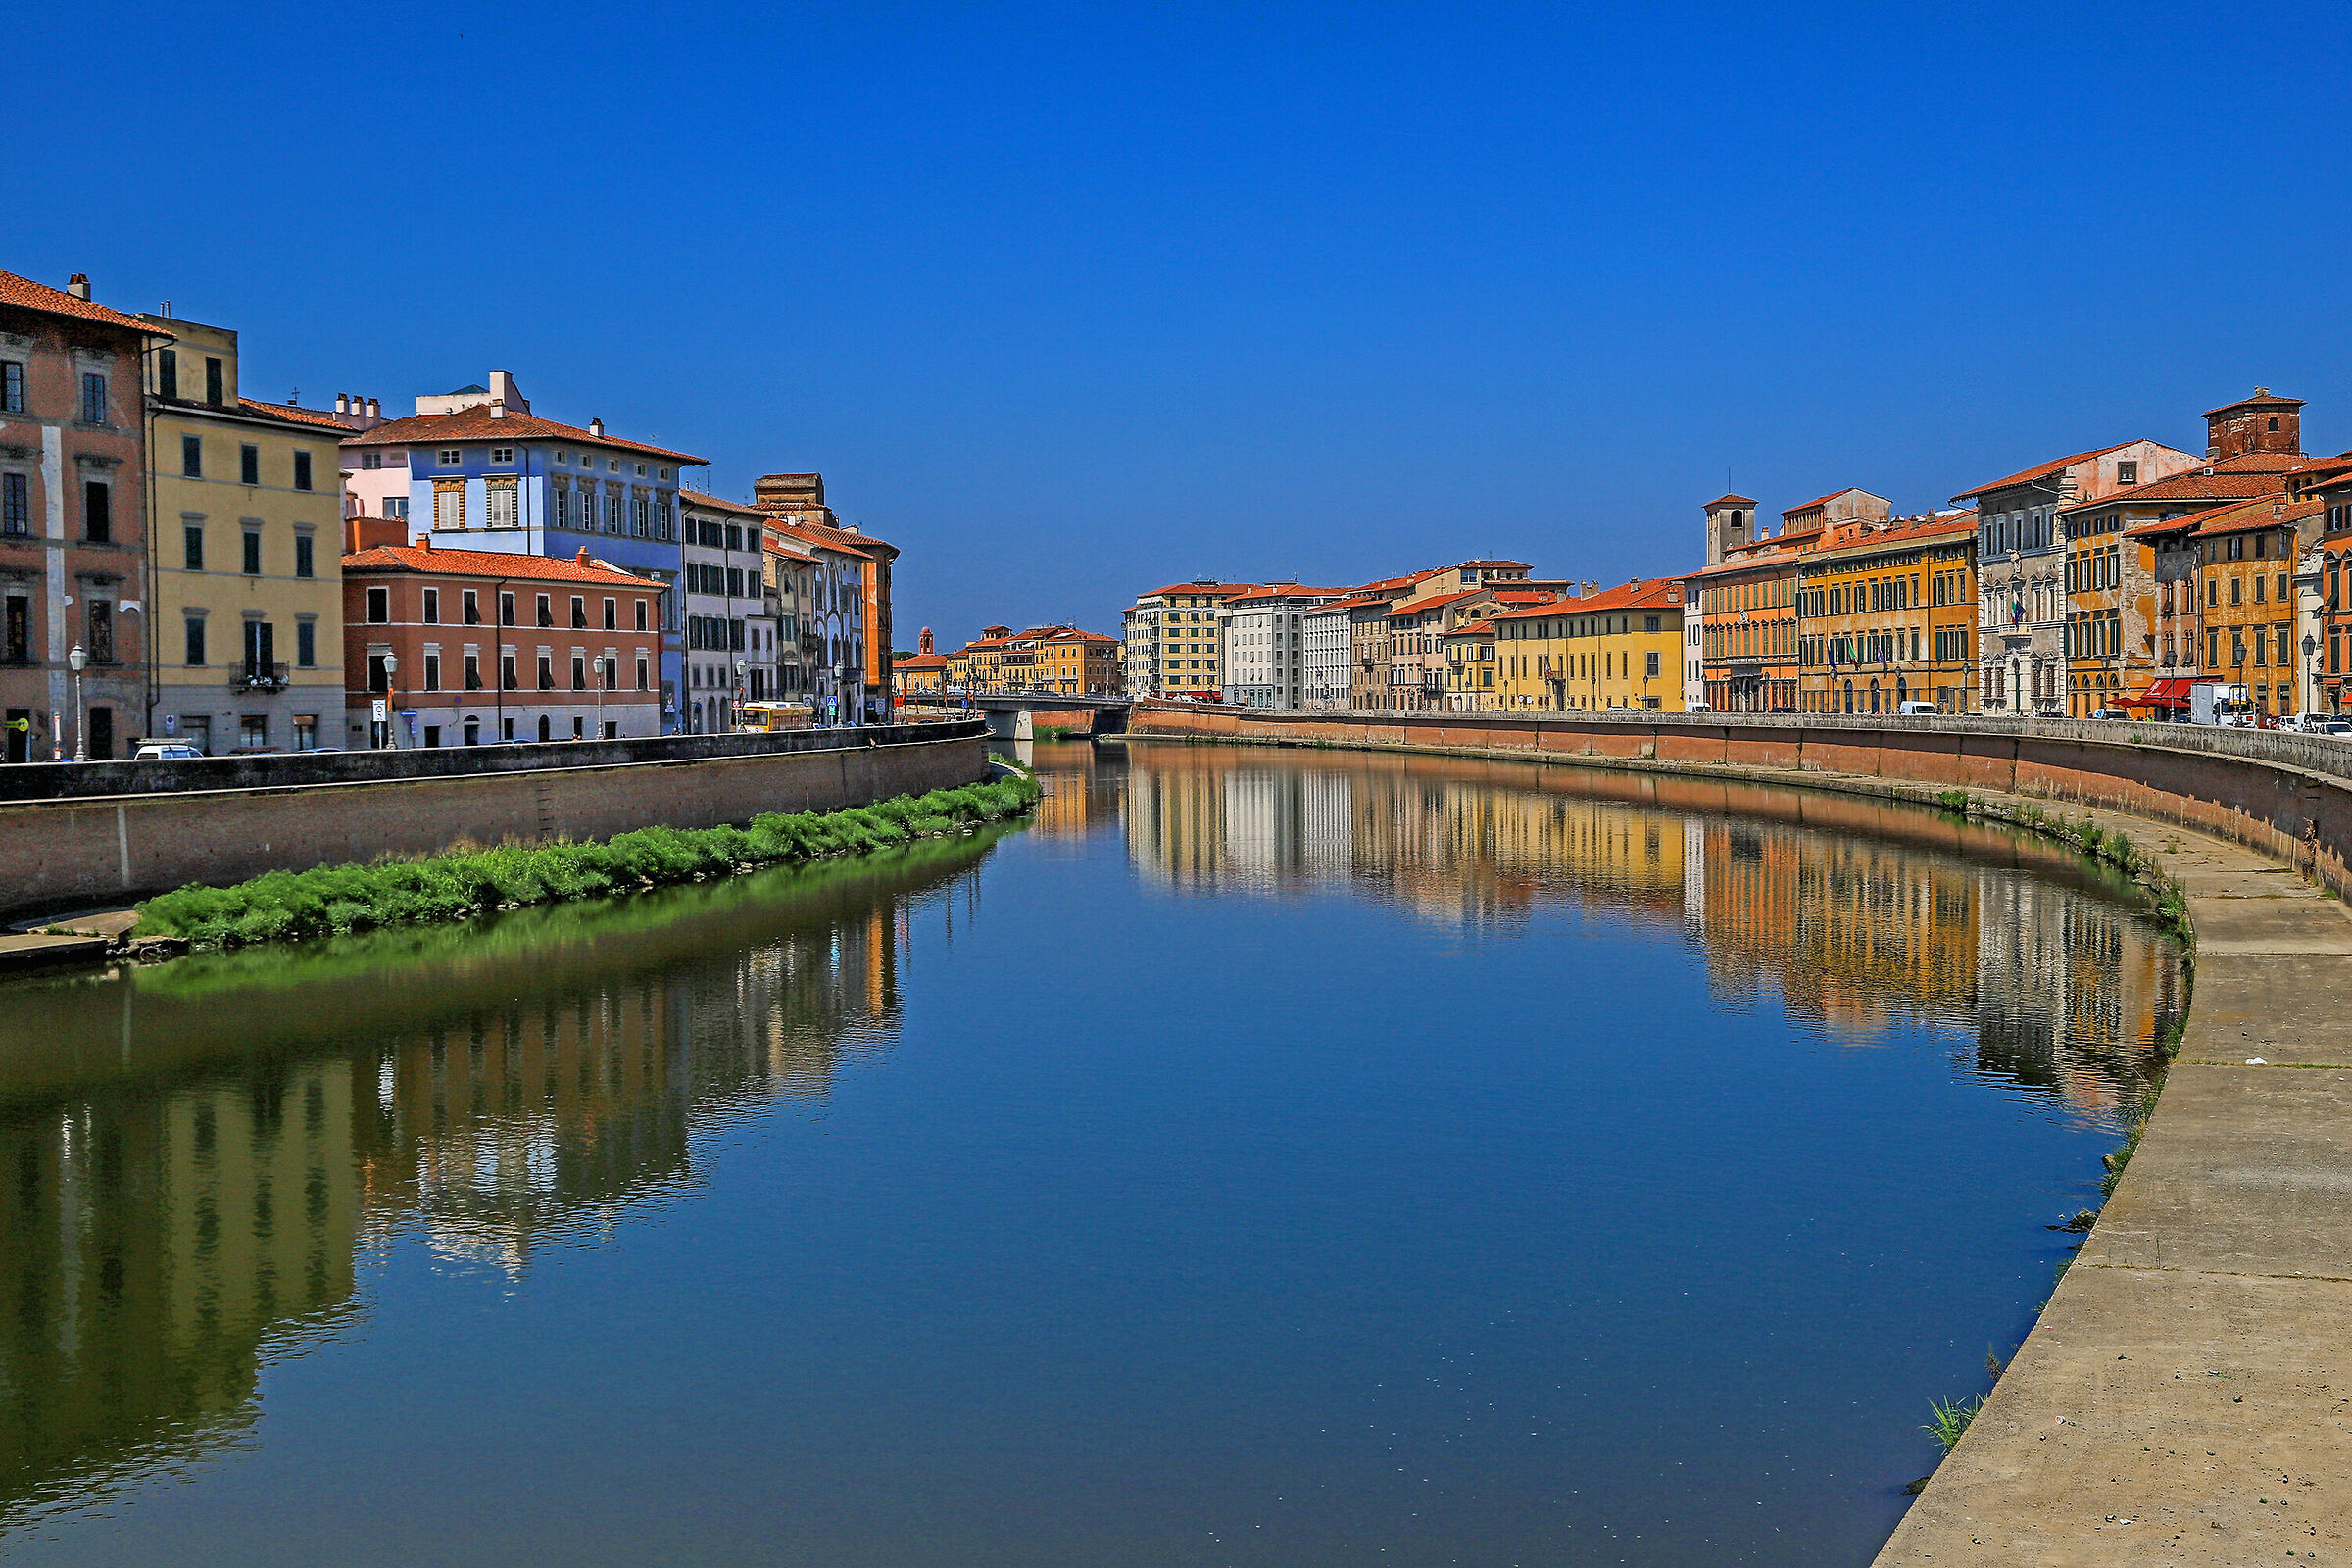 The Arno of Pisa...